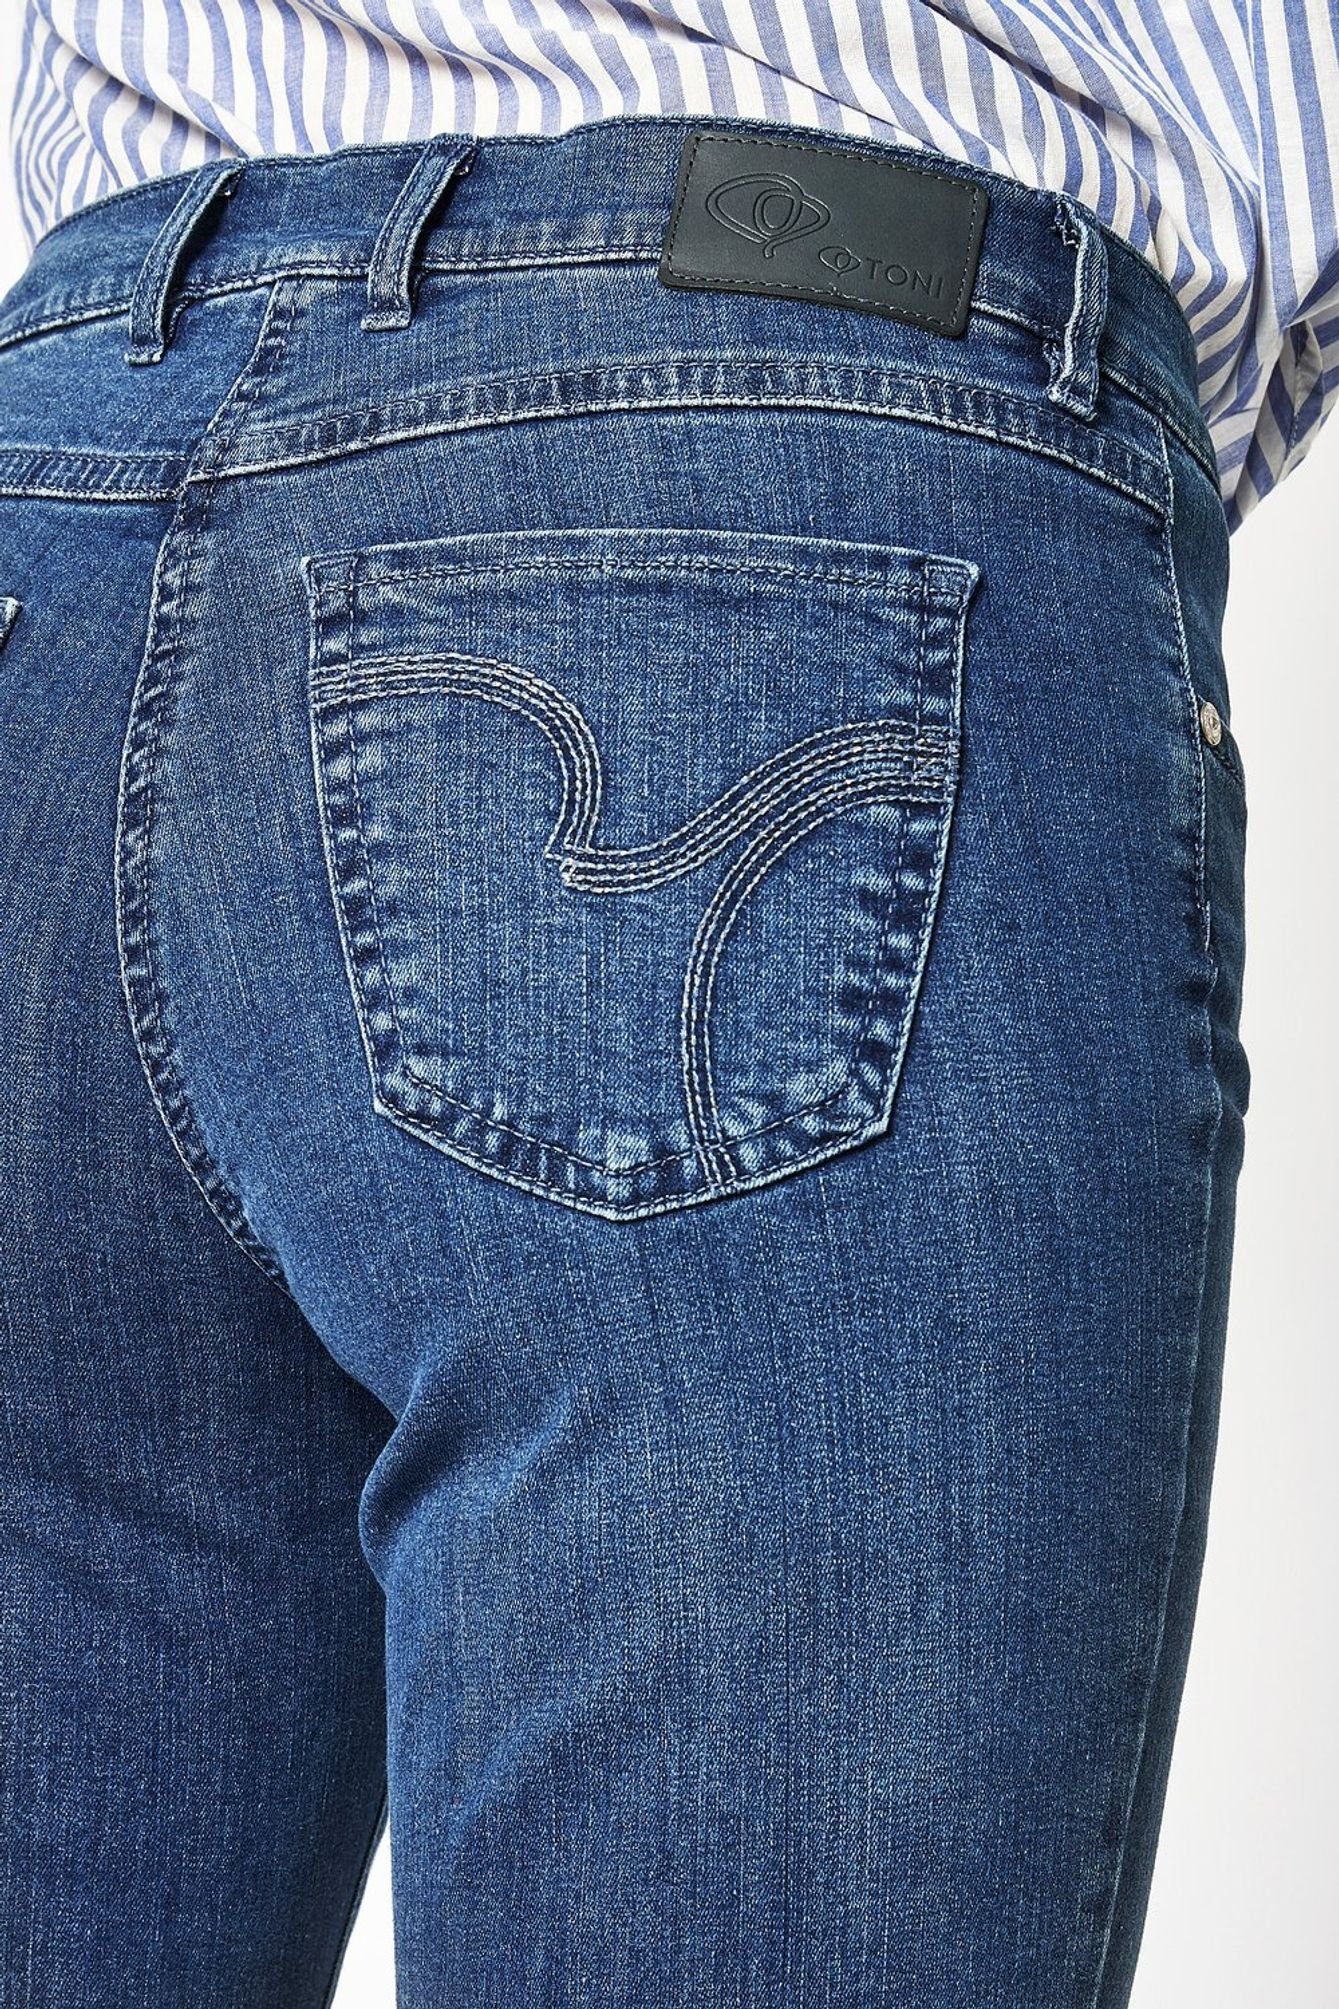 12-04 TONI mid 1106 5-Pocket-Jeans (502) used 5-Pocket-Design blue